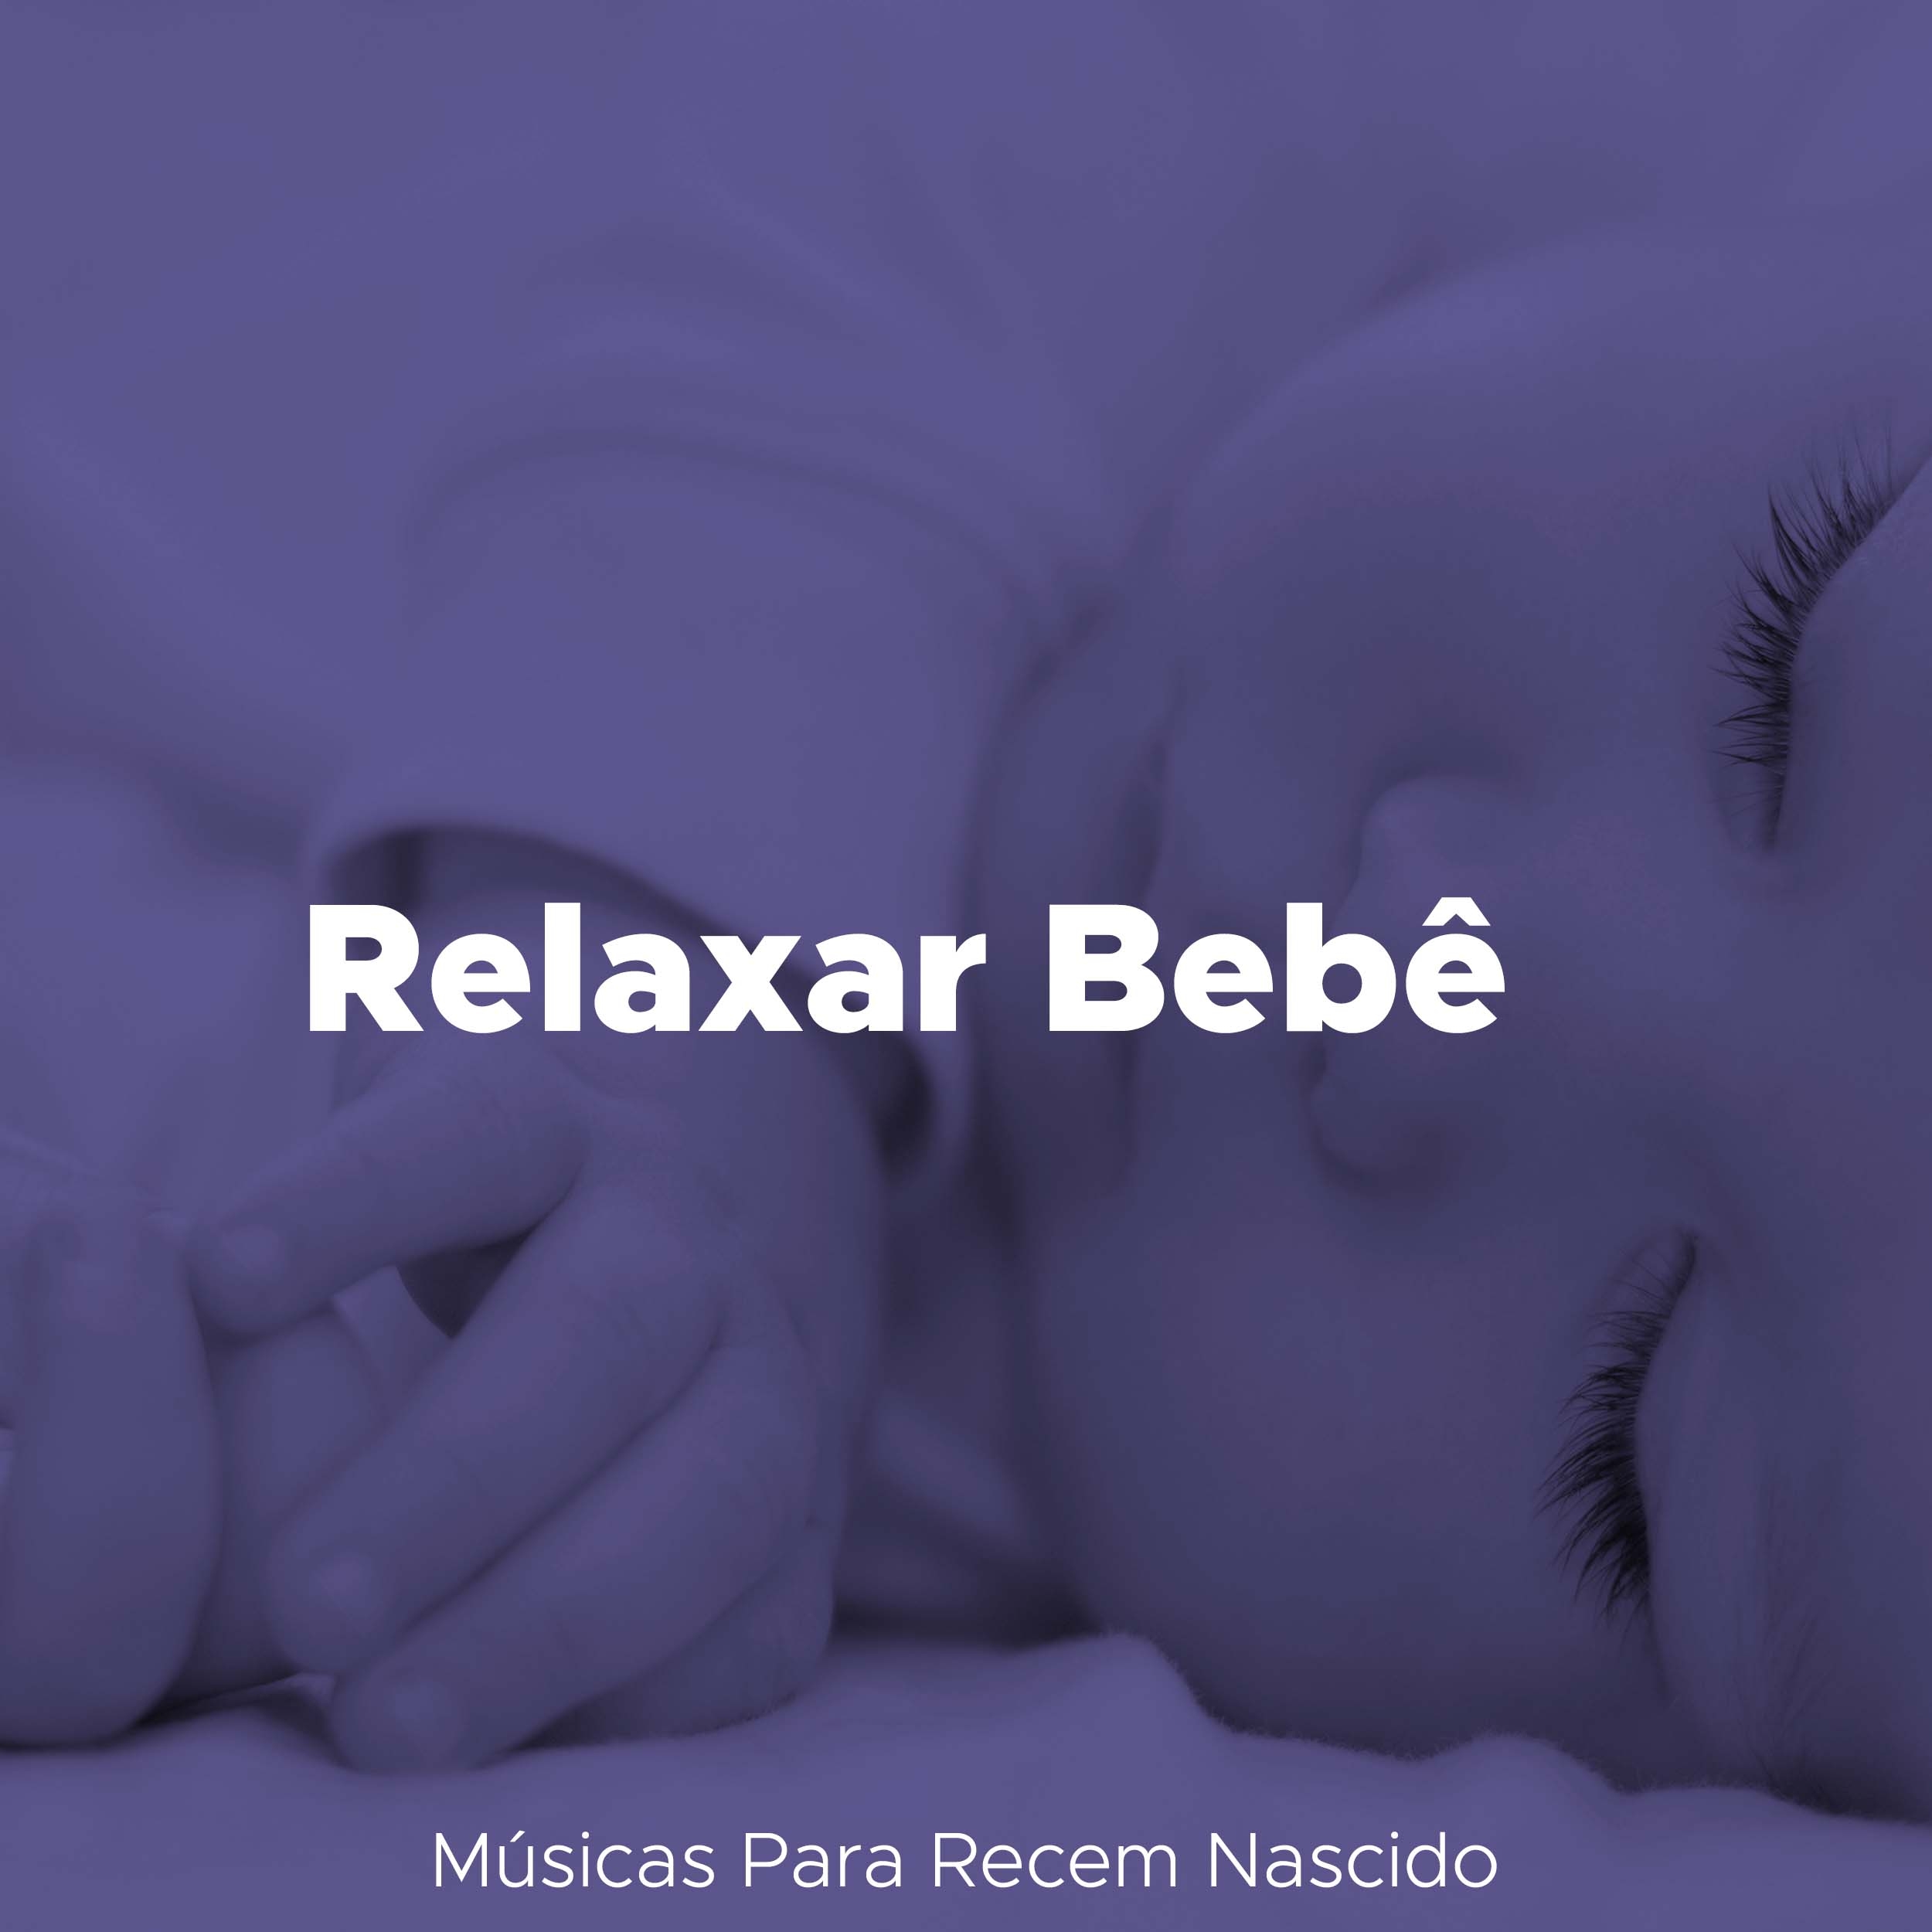 Relaxar Bebe: Sons para Relaxar, Musicas Para Recem Nascido